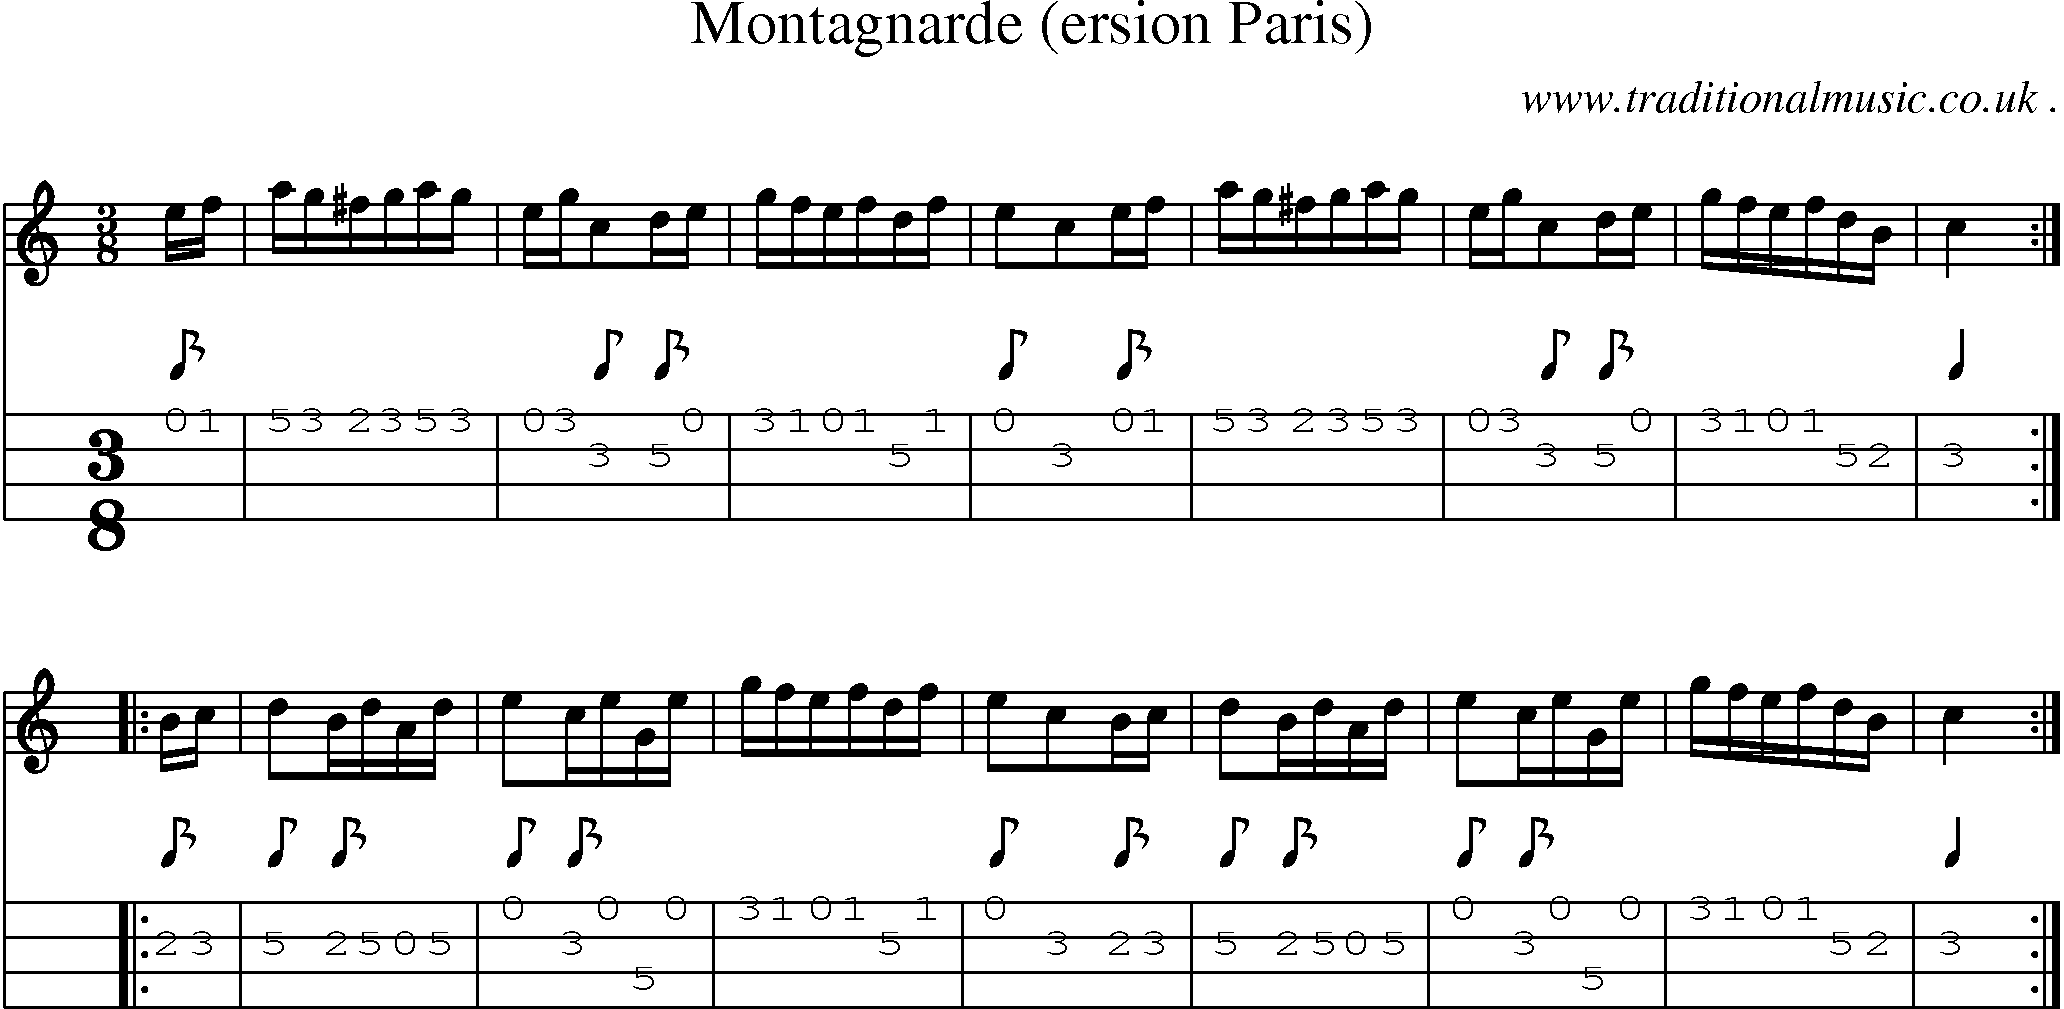 Sheet-Music and Mandolin Tabs for Montagnarde (ersion Paris)